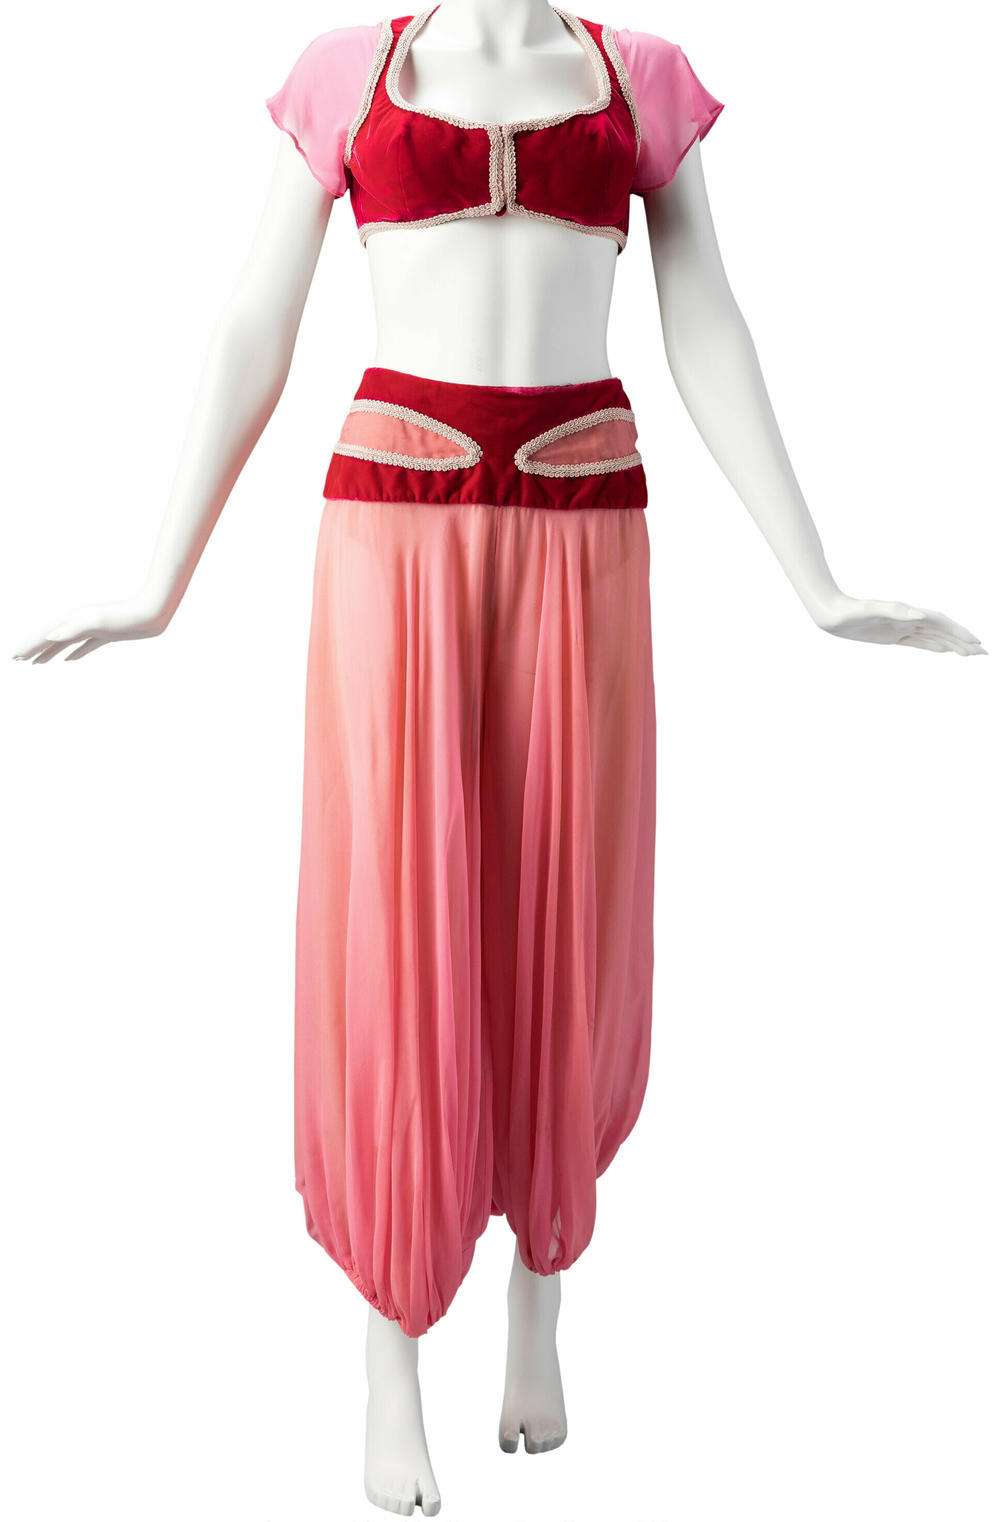 Barbara Eden's costume for Jeannie, from the TV show <em>I Dream of Jeannie</em>.